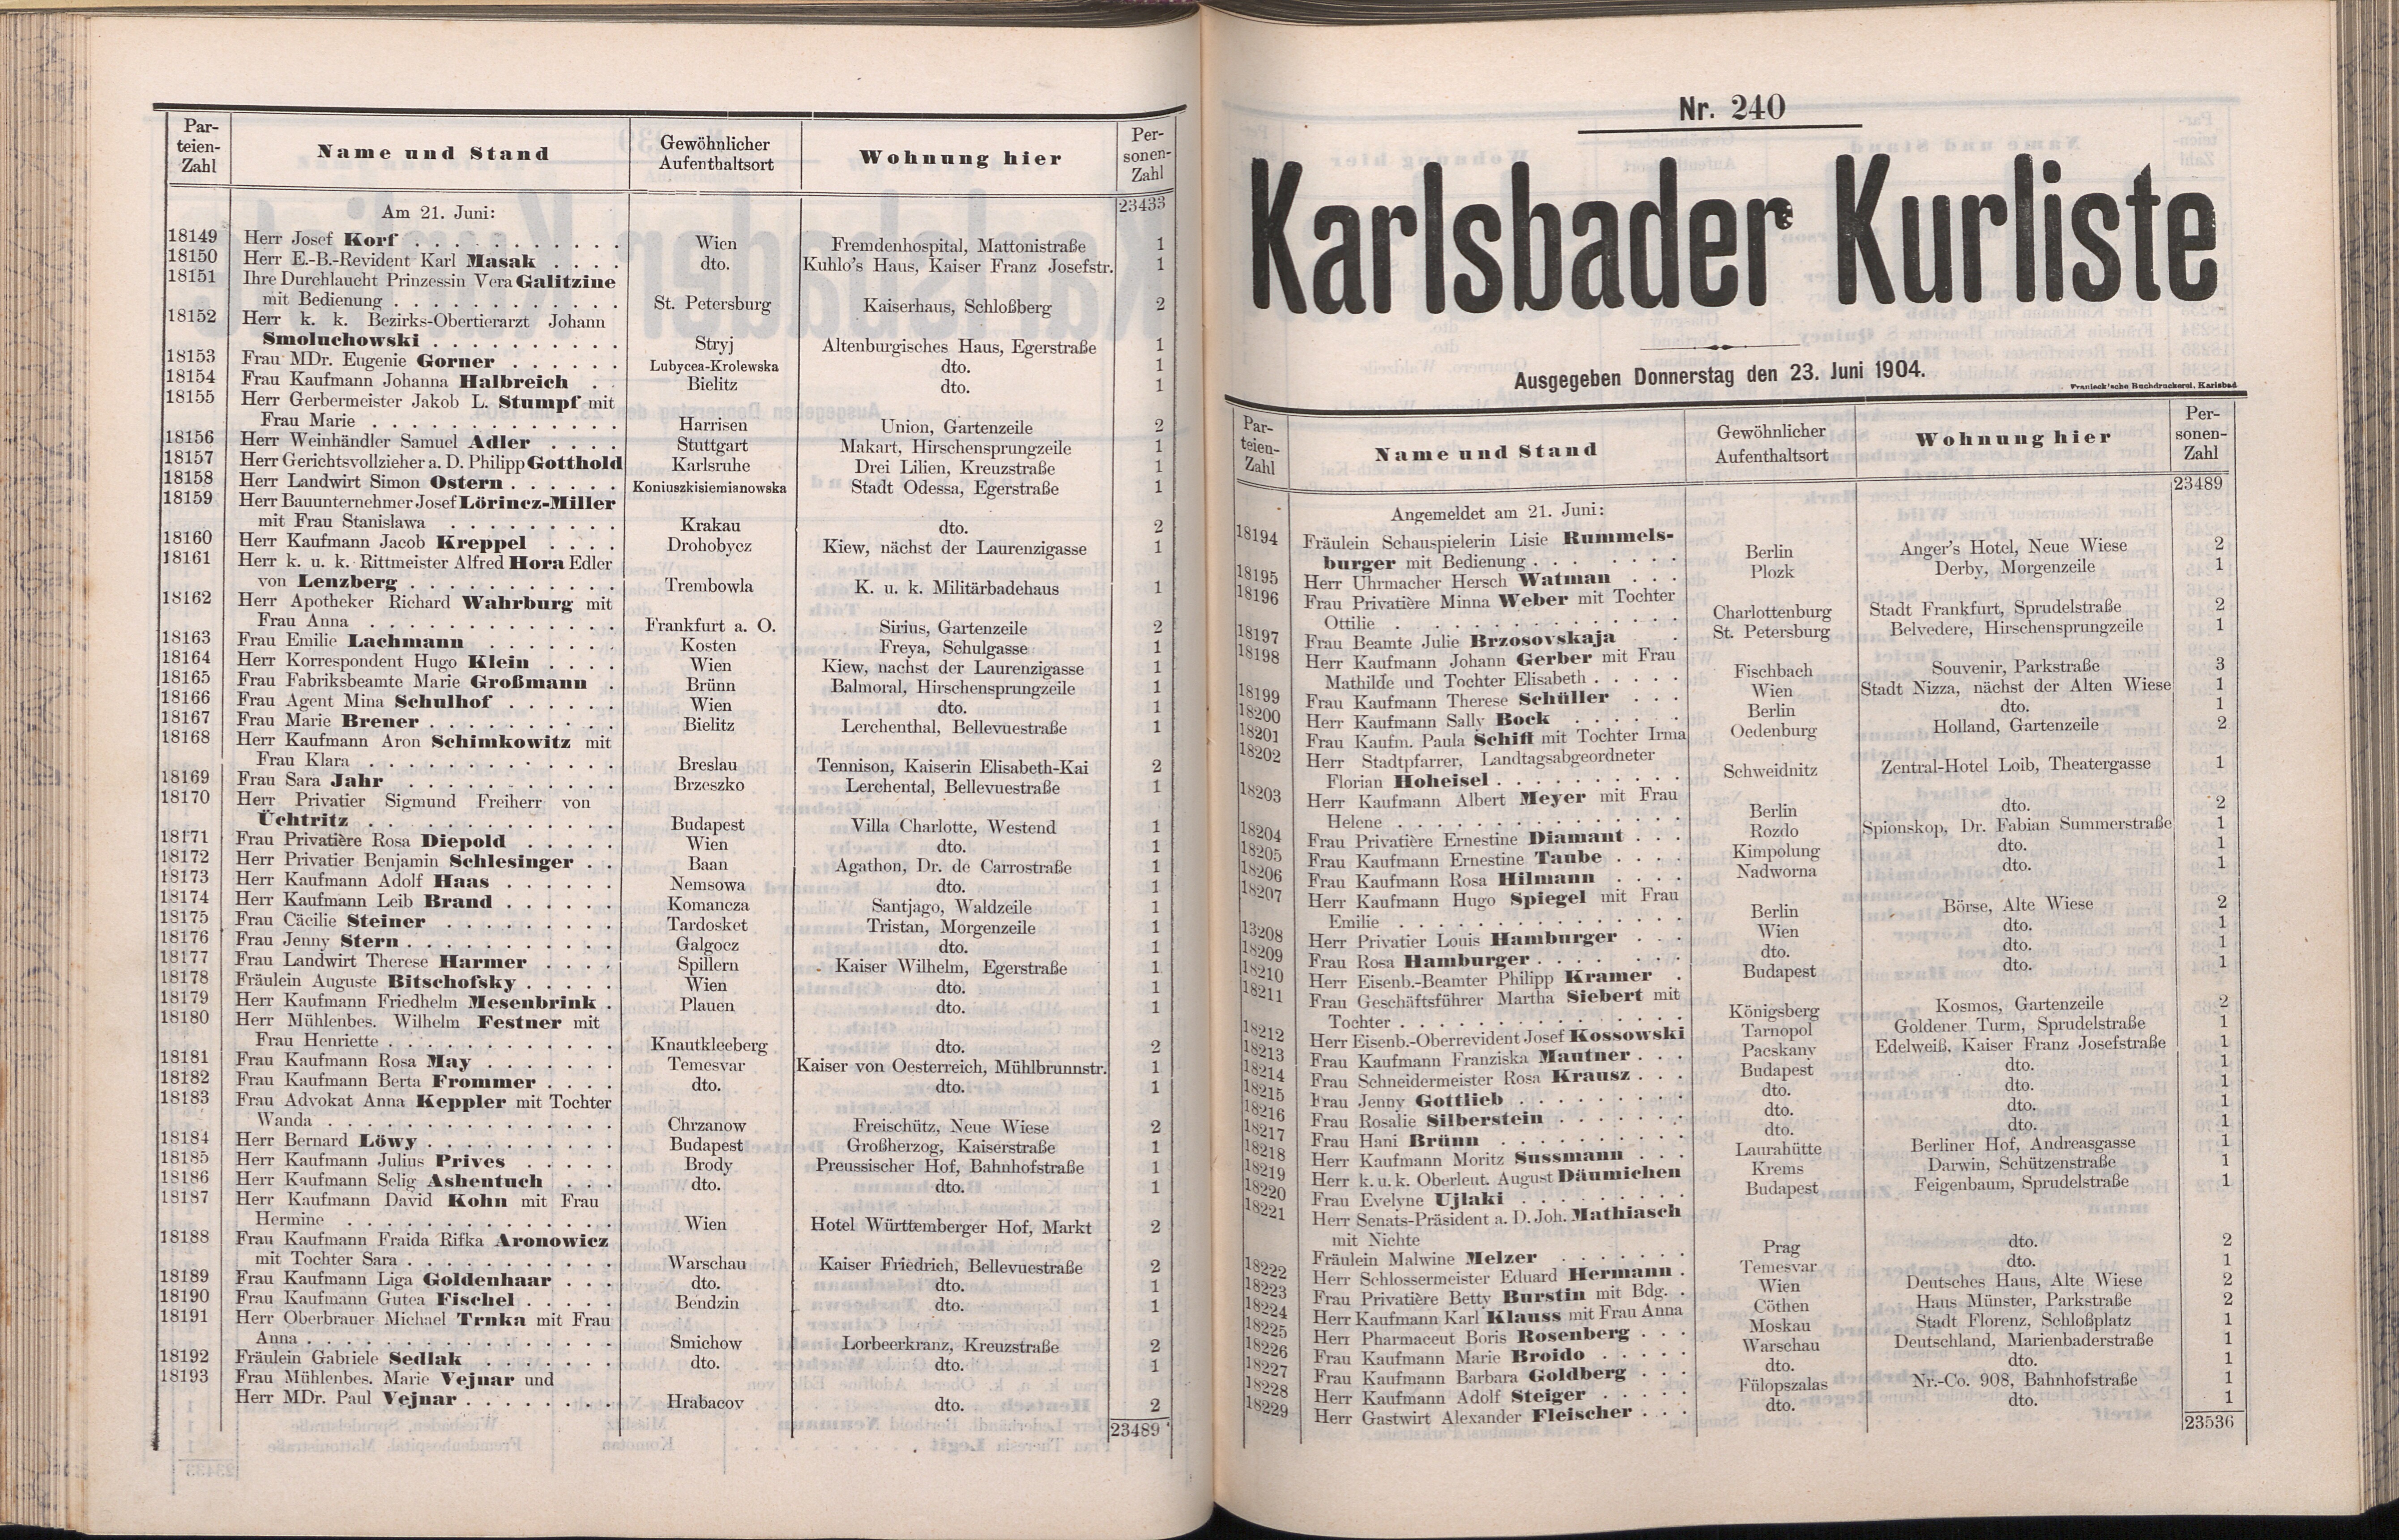 262. soap-kv_knihovna_karlsbader-kurliste-1904_2630